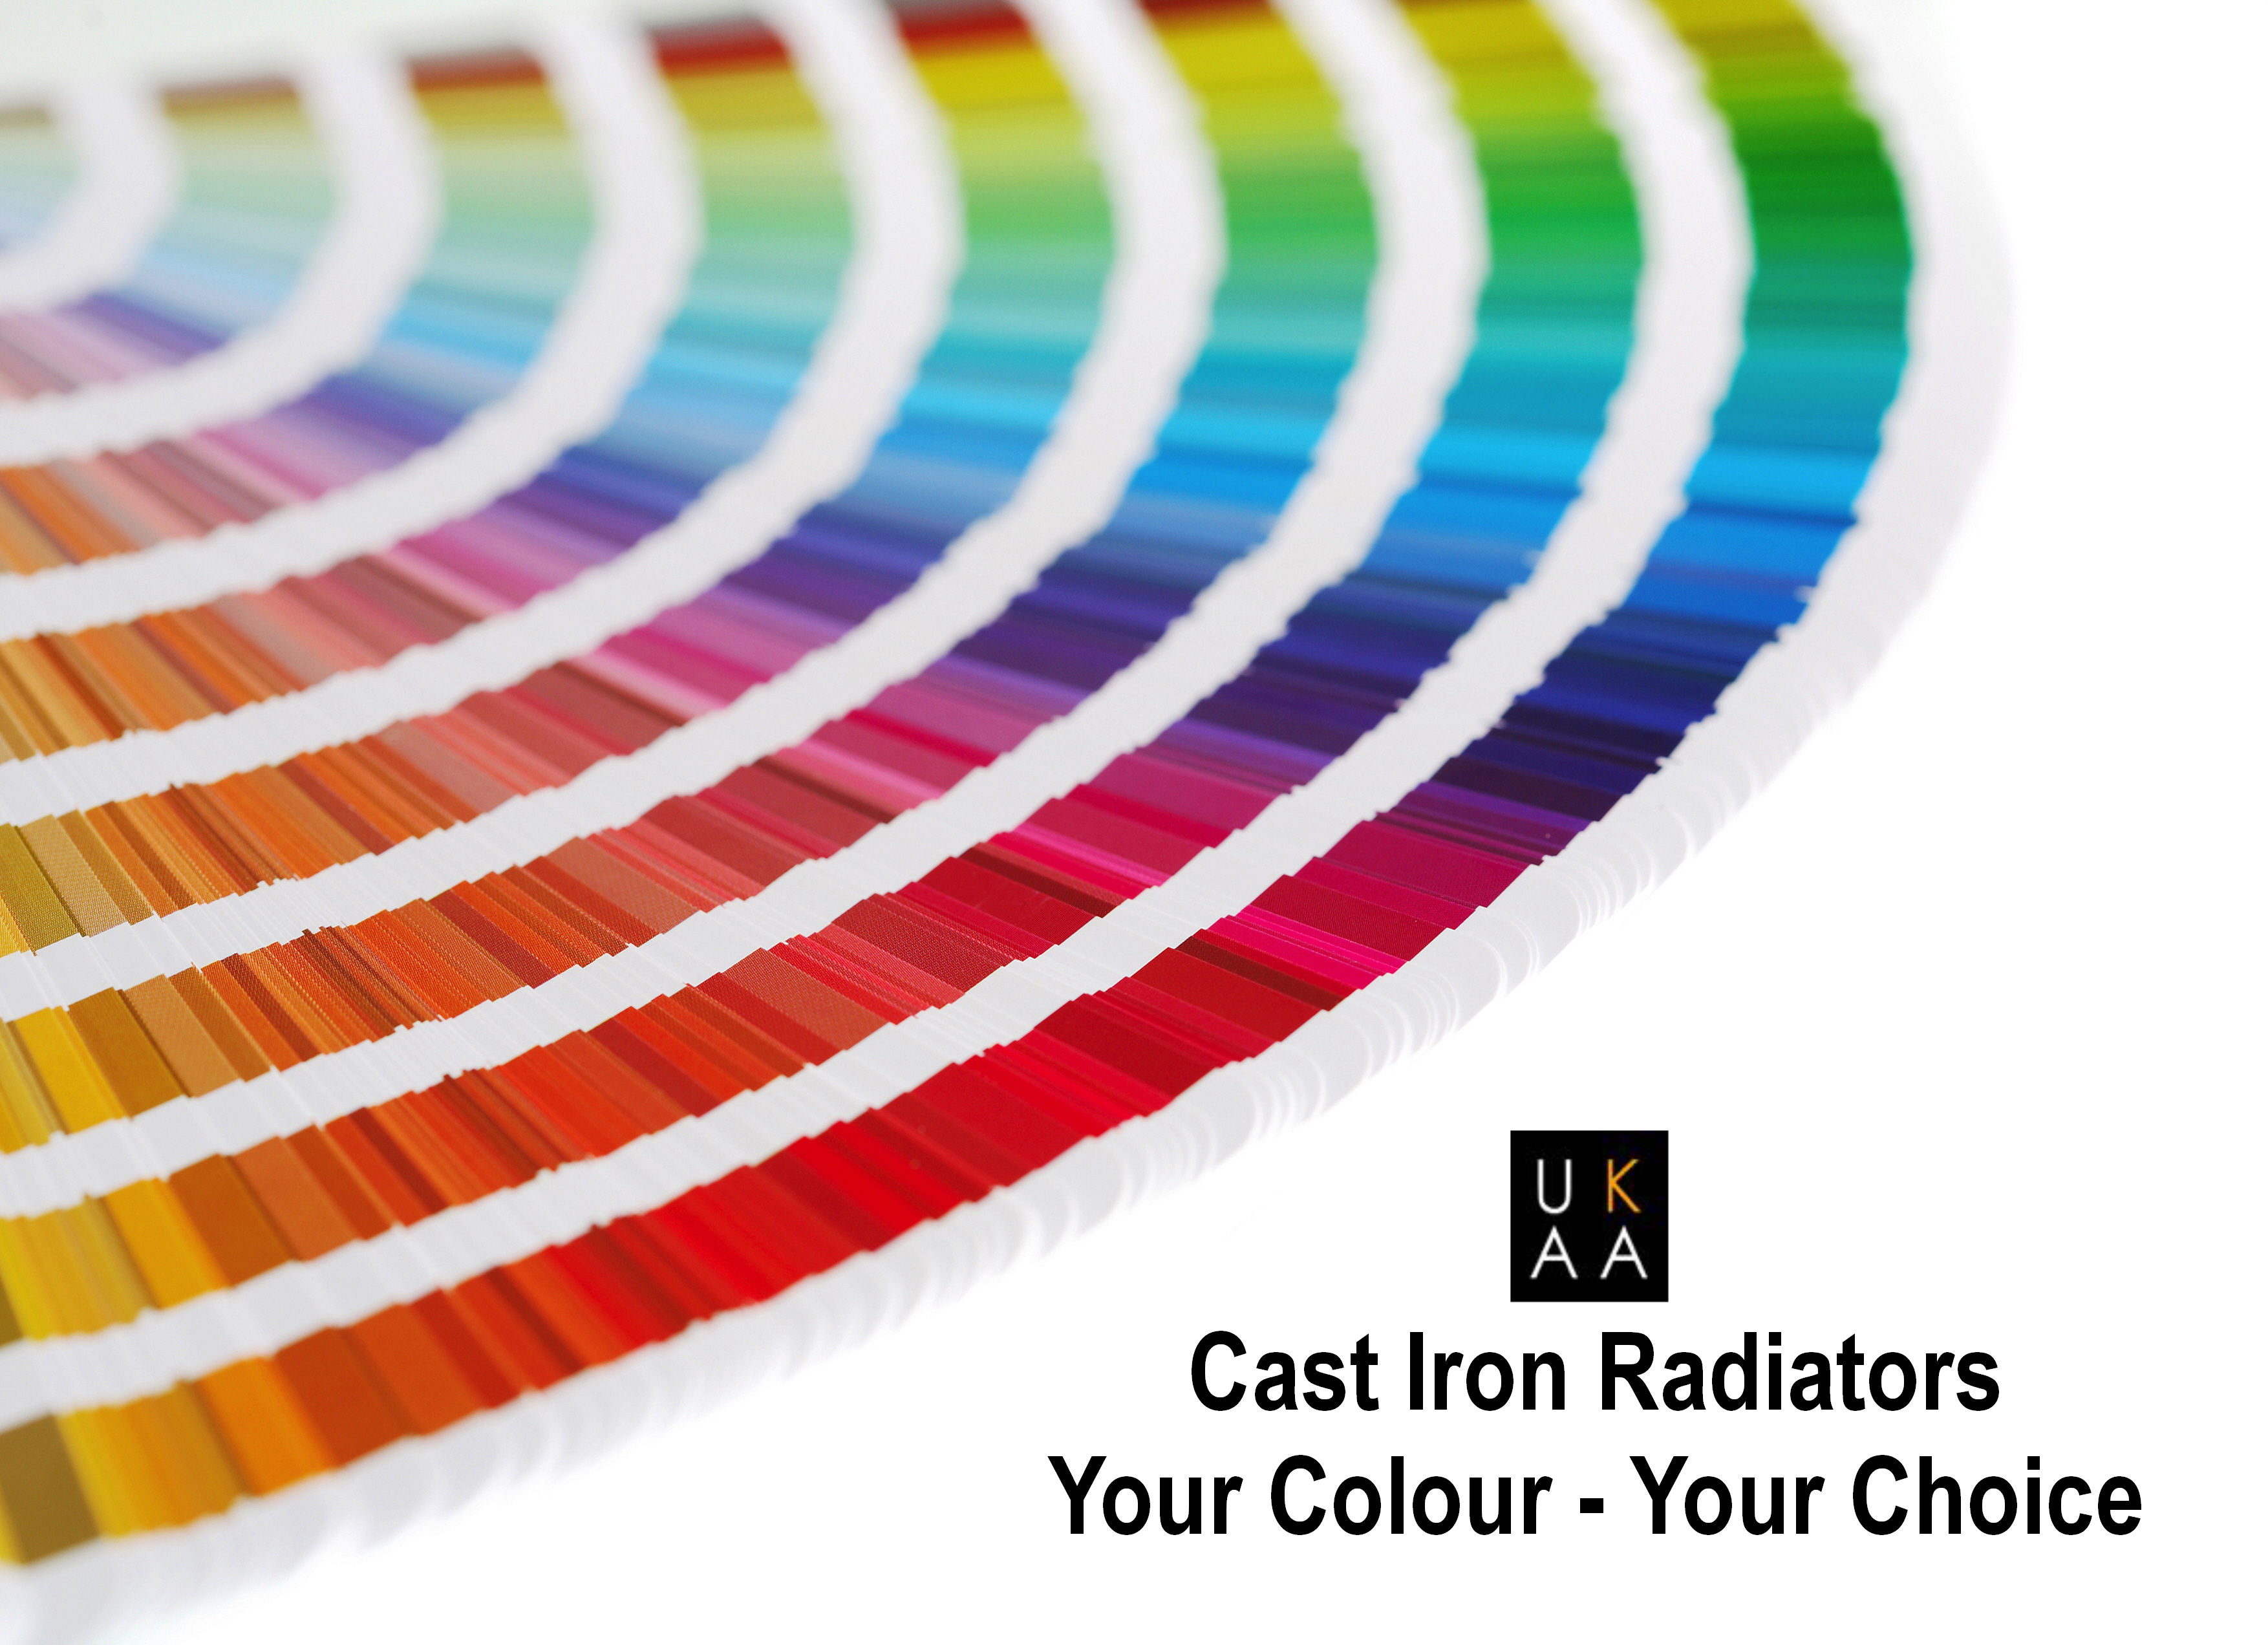 UKAA Cast Iron Radiators Colour Choice